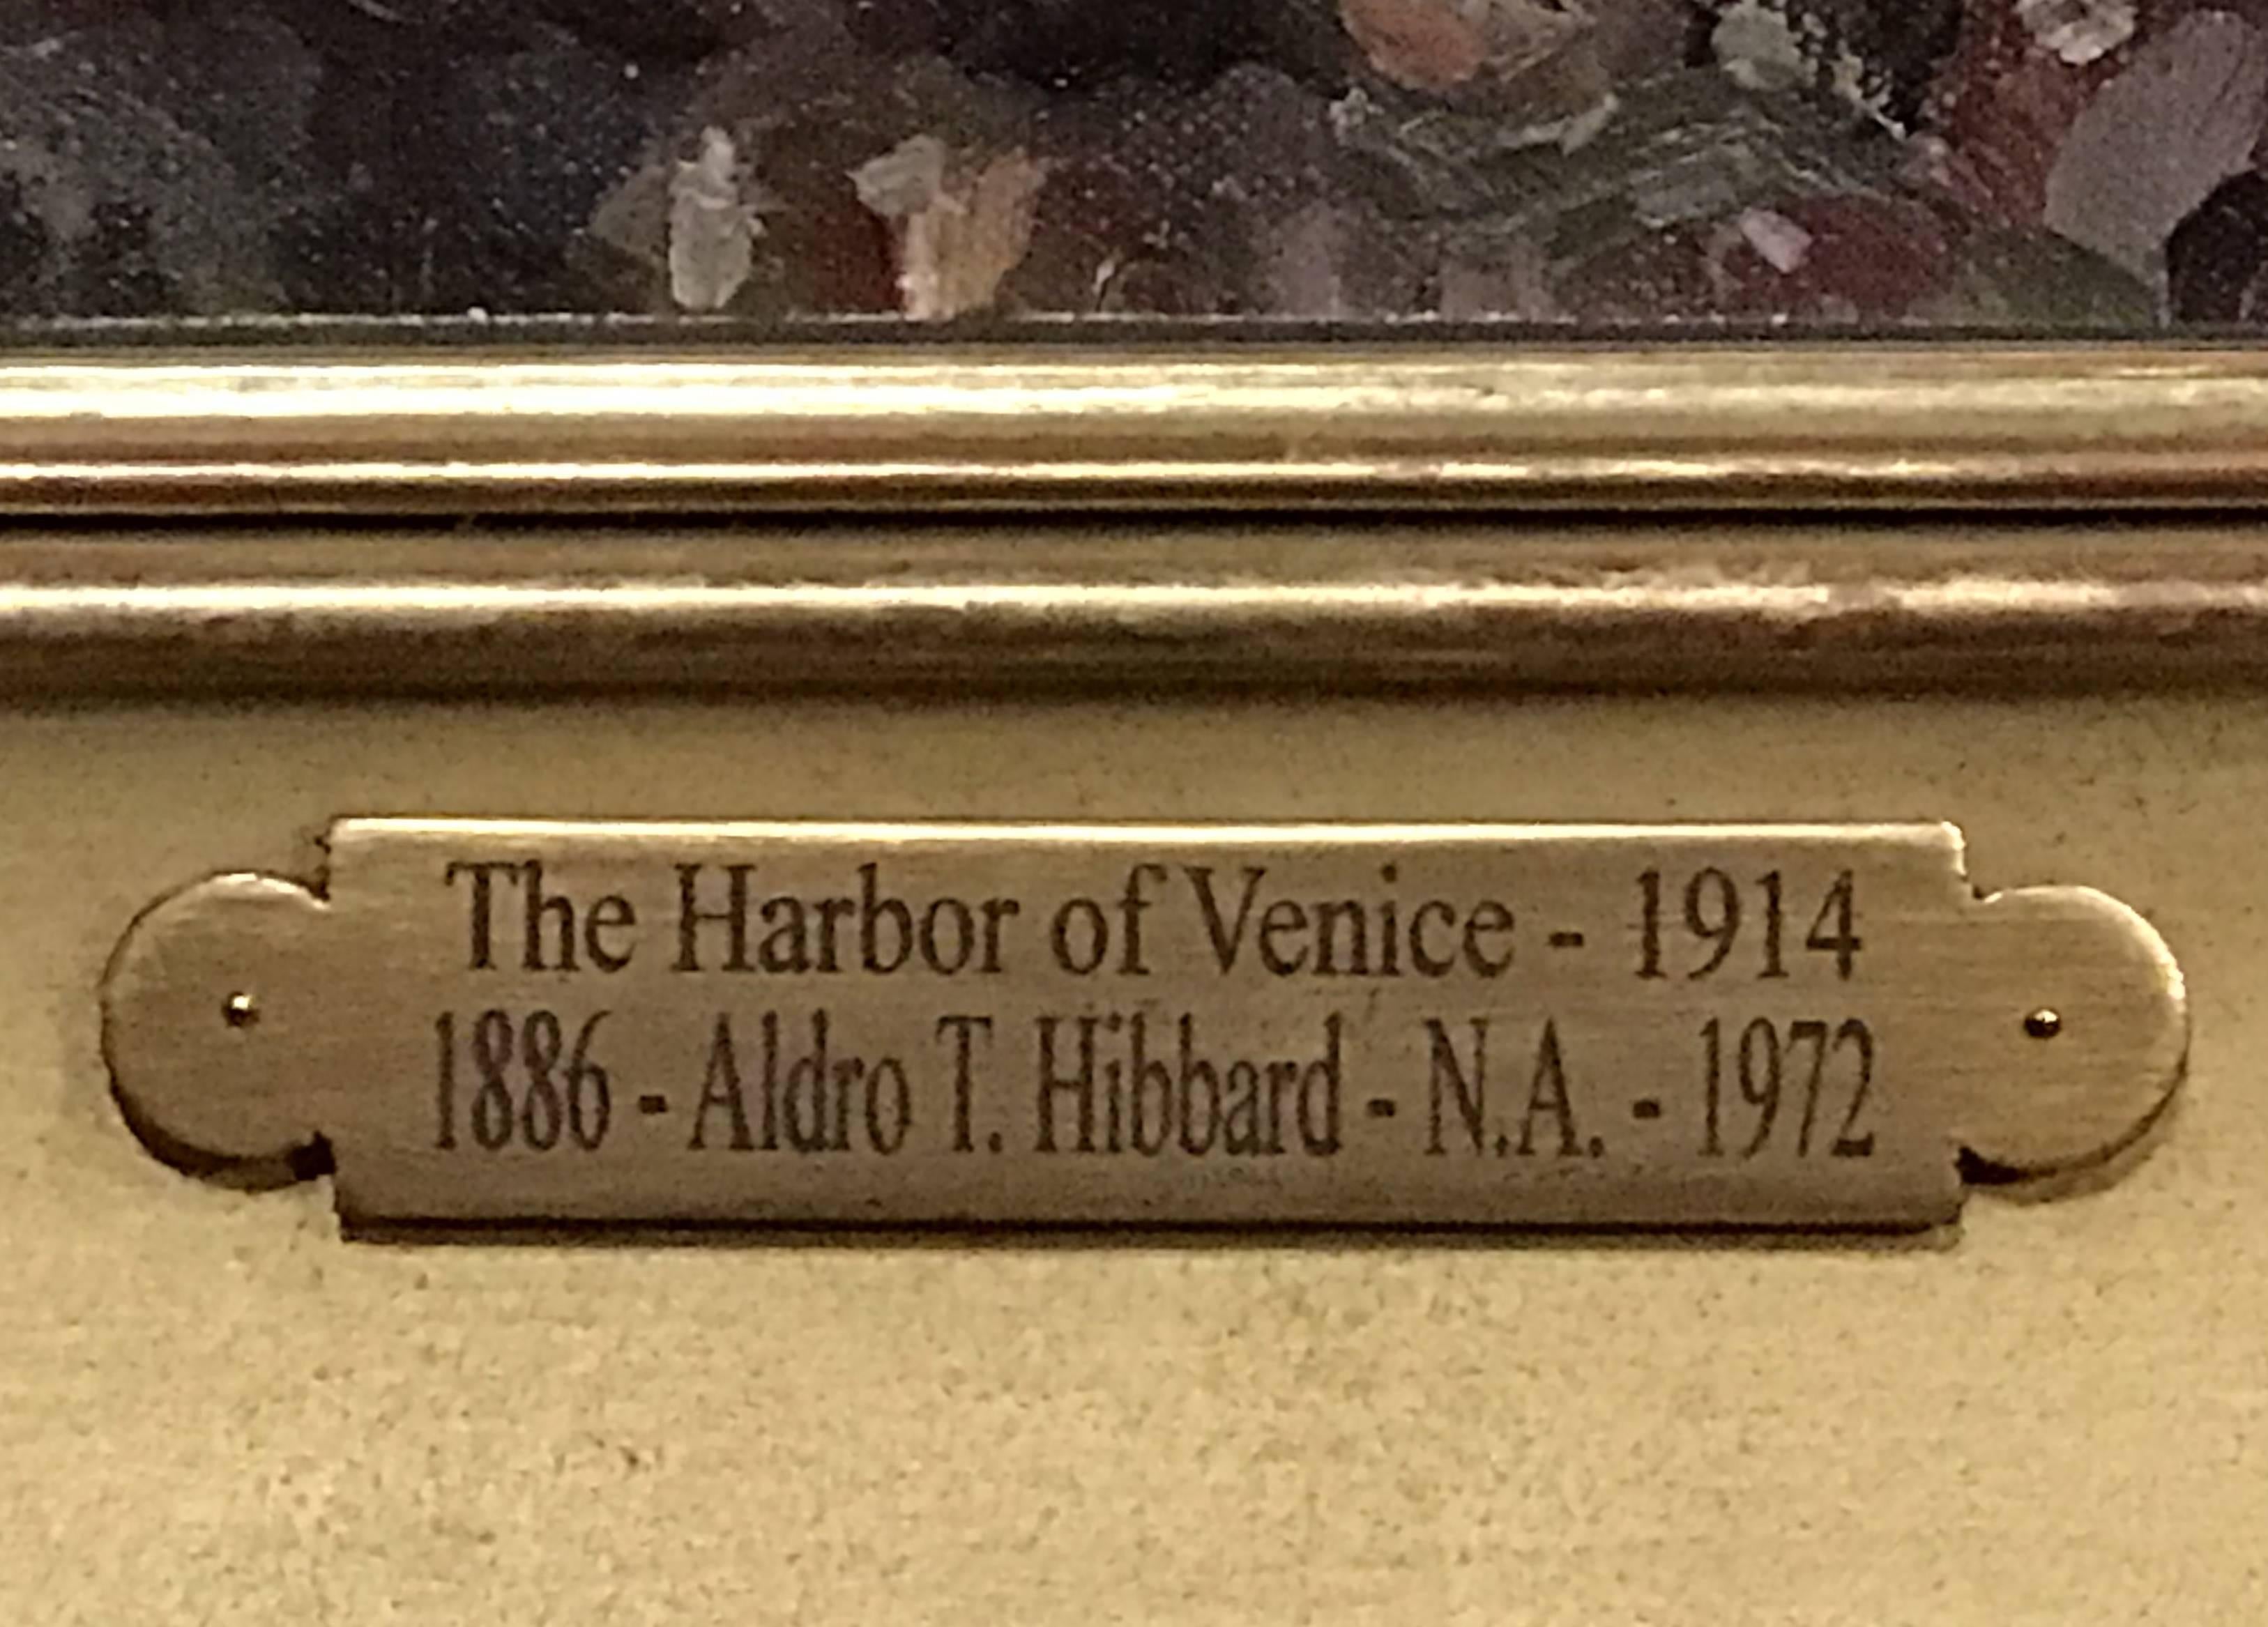 Aldro Thompson Hibbard Impressionist Oil Painting, Harbor of Venice, Italy, 1914 1